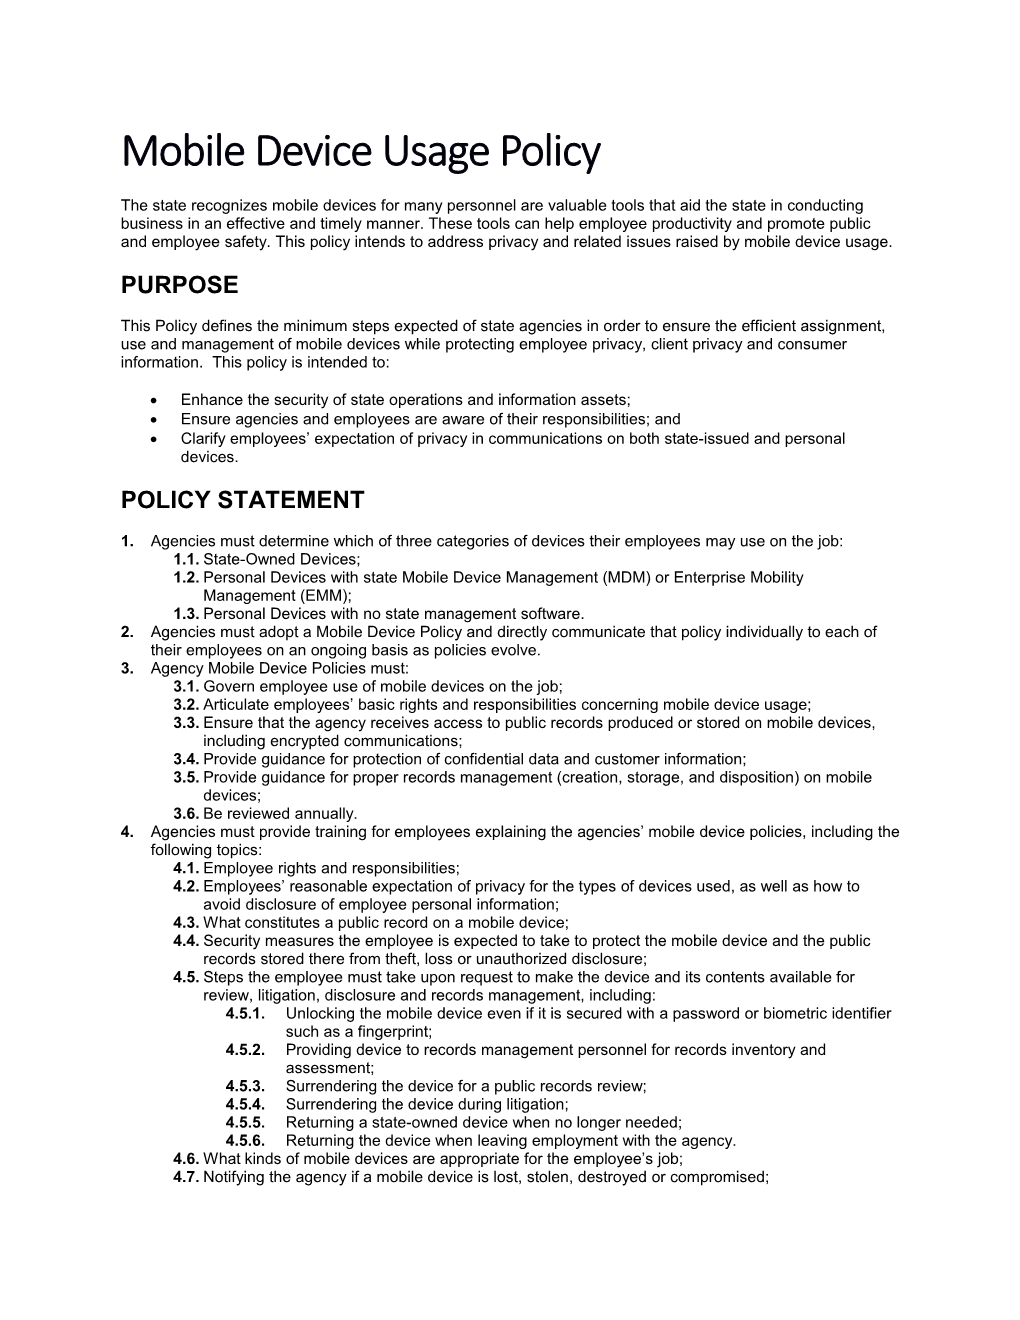 OCIO Policy 191 - Mobile Device Usage